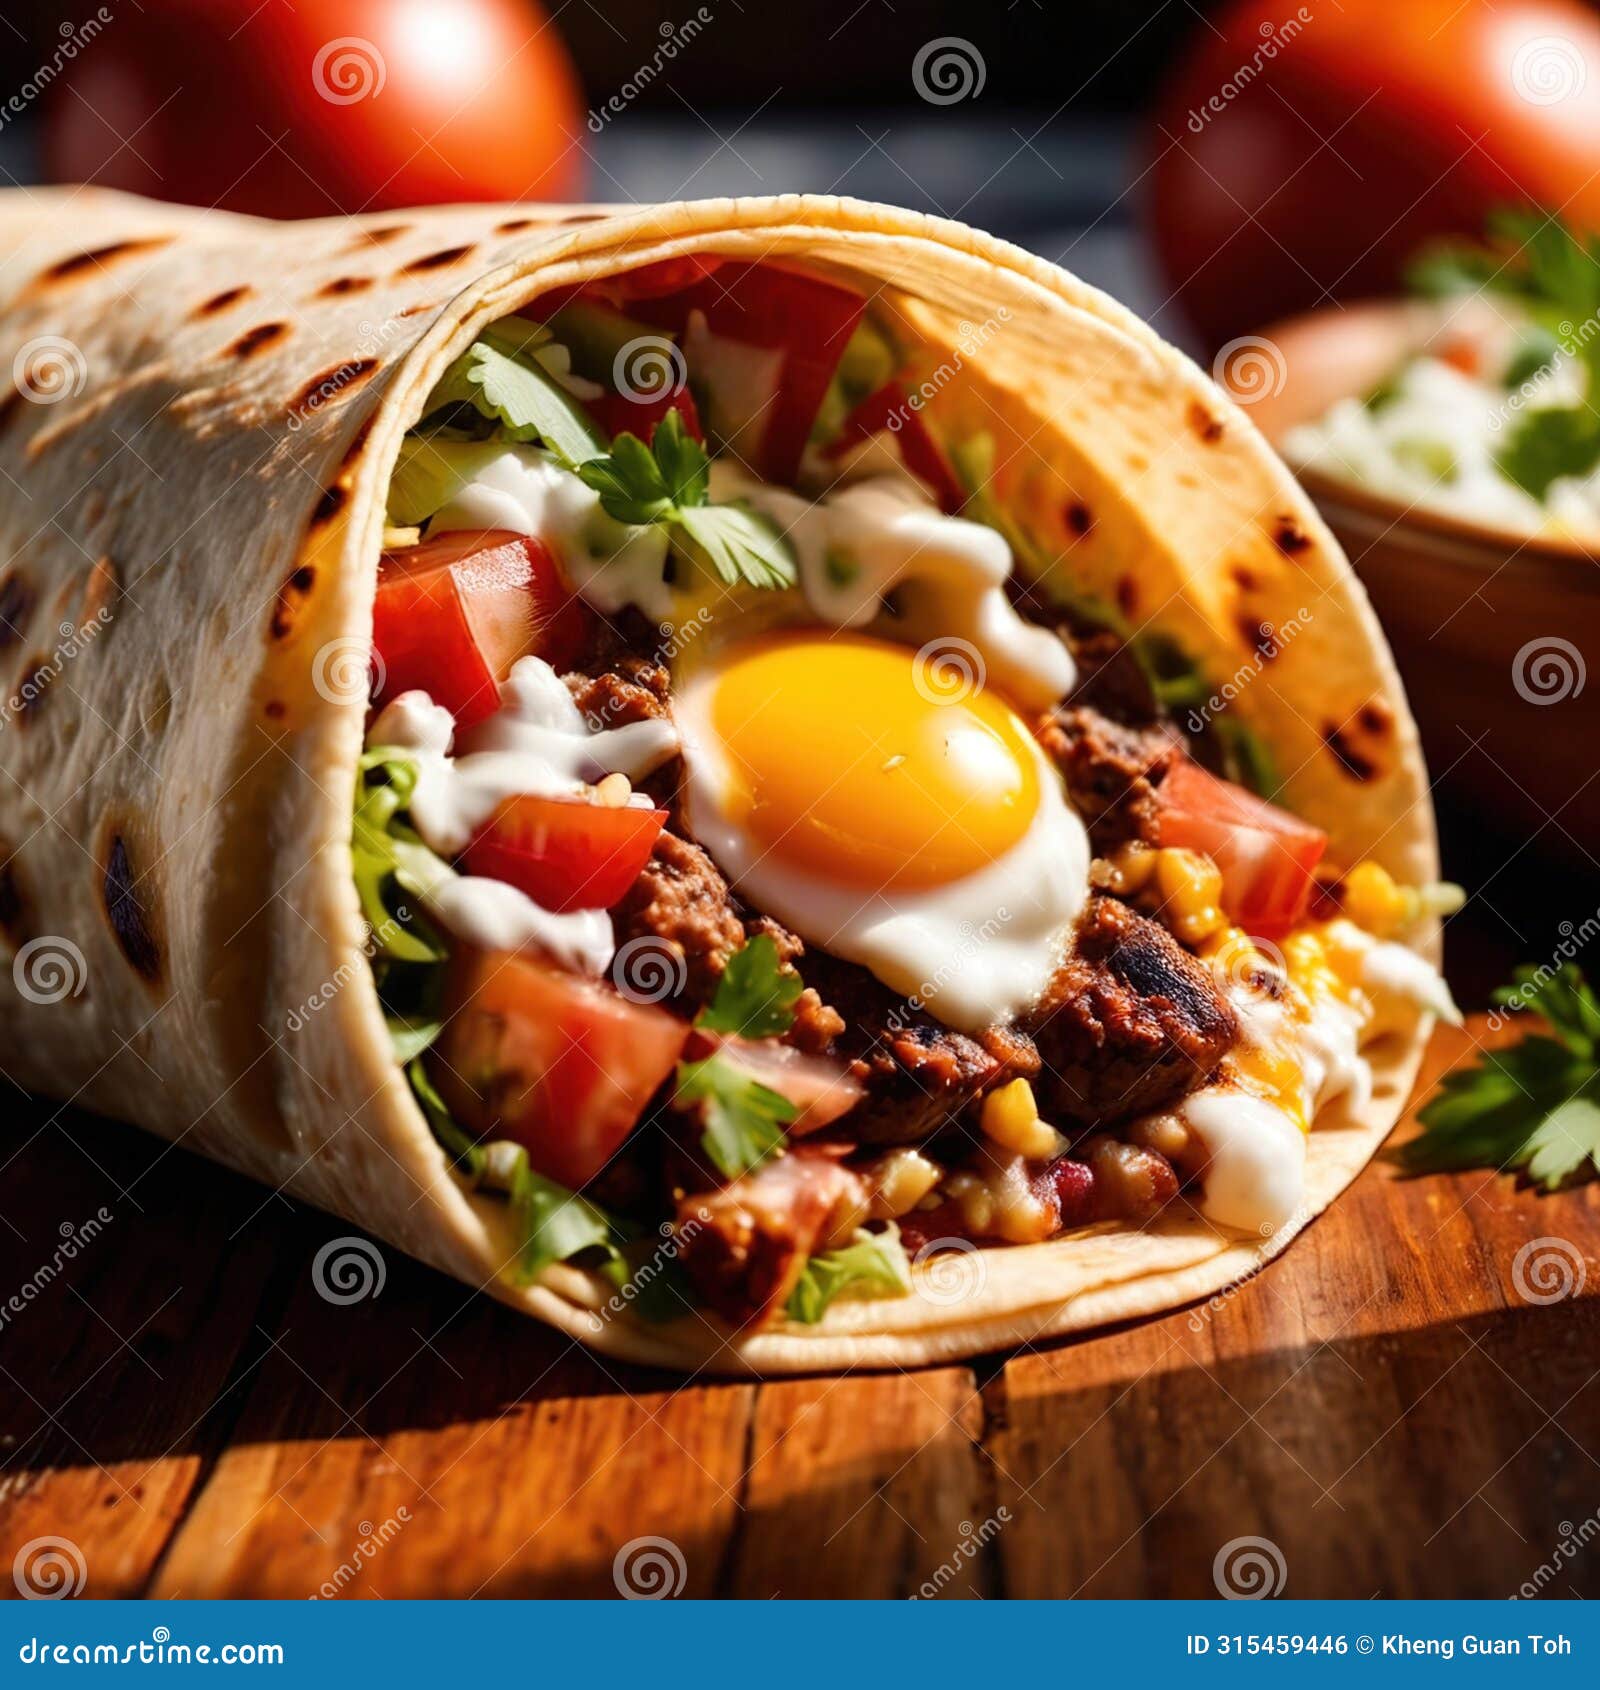 breakfast burrito, mexican american breakfast food, convenient wrap